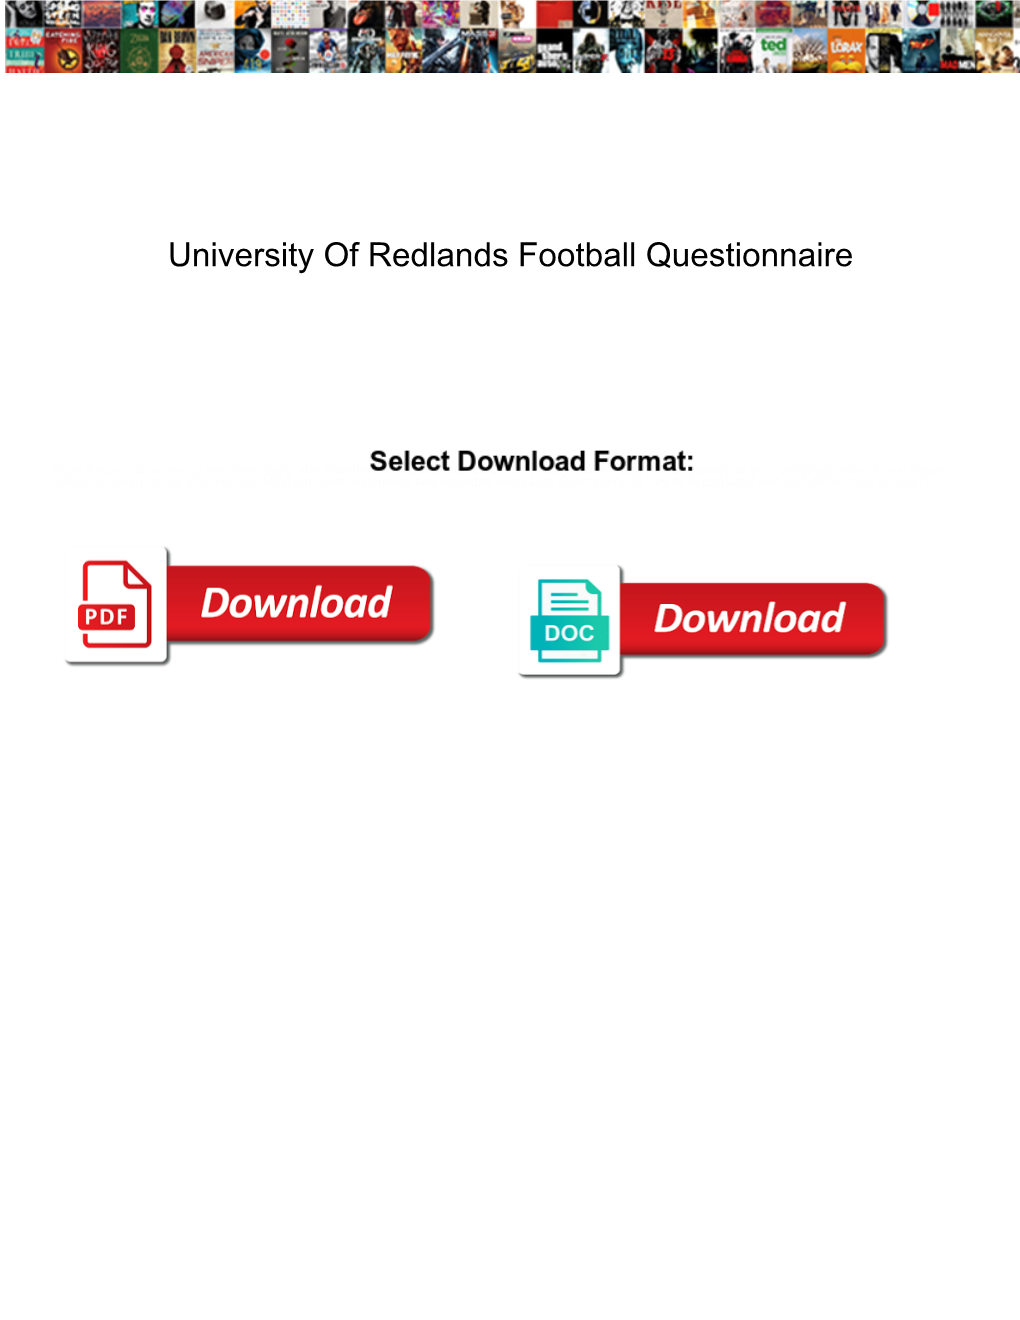 University of Redlands Football Questionnaire